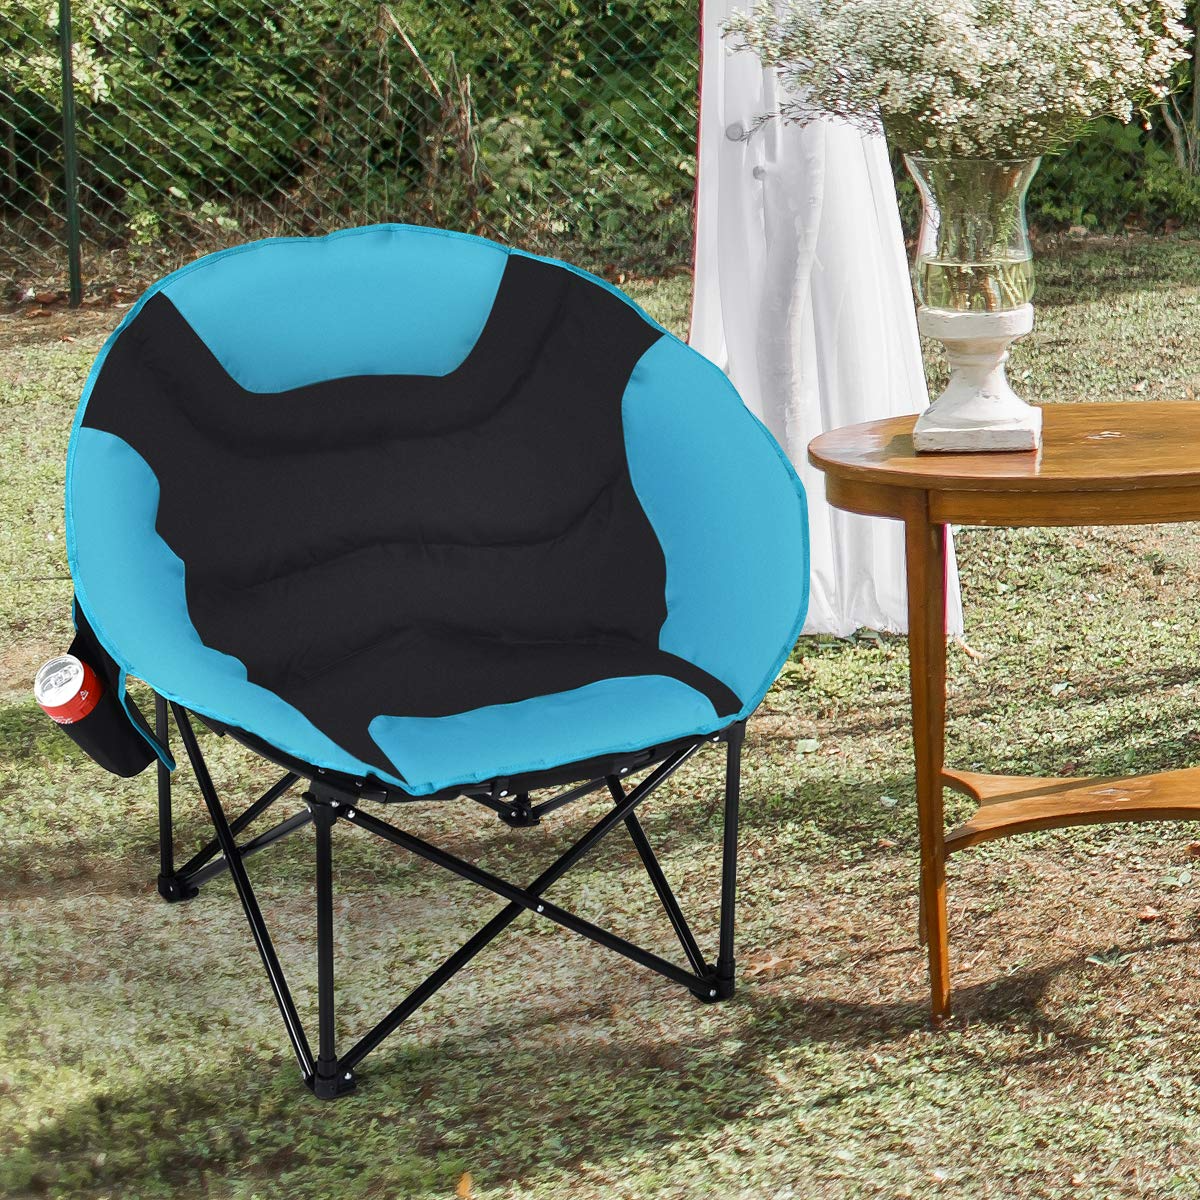 Giantex Folding Camping Chair Moon Saucer Chair